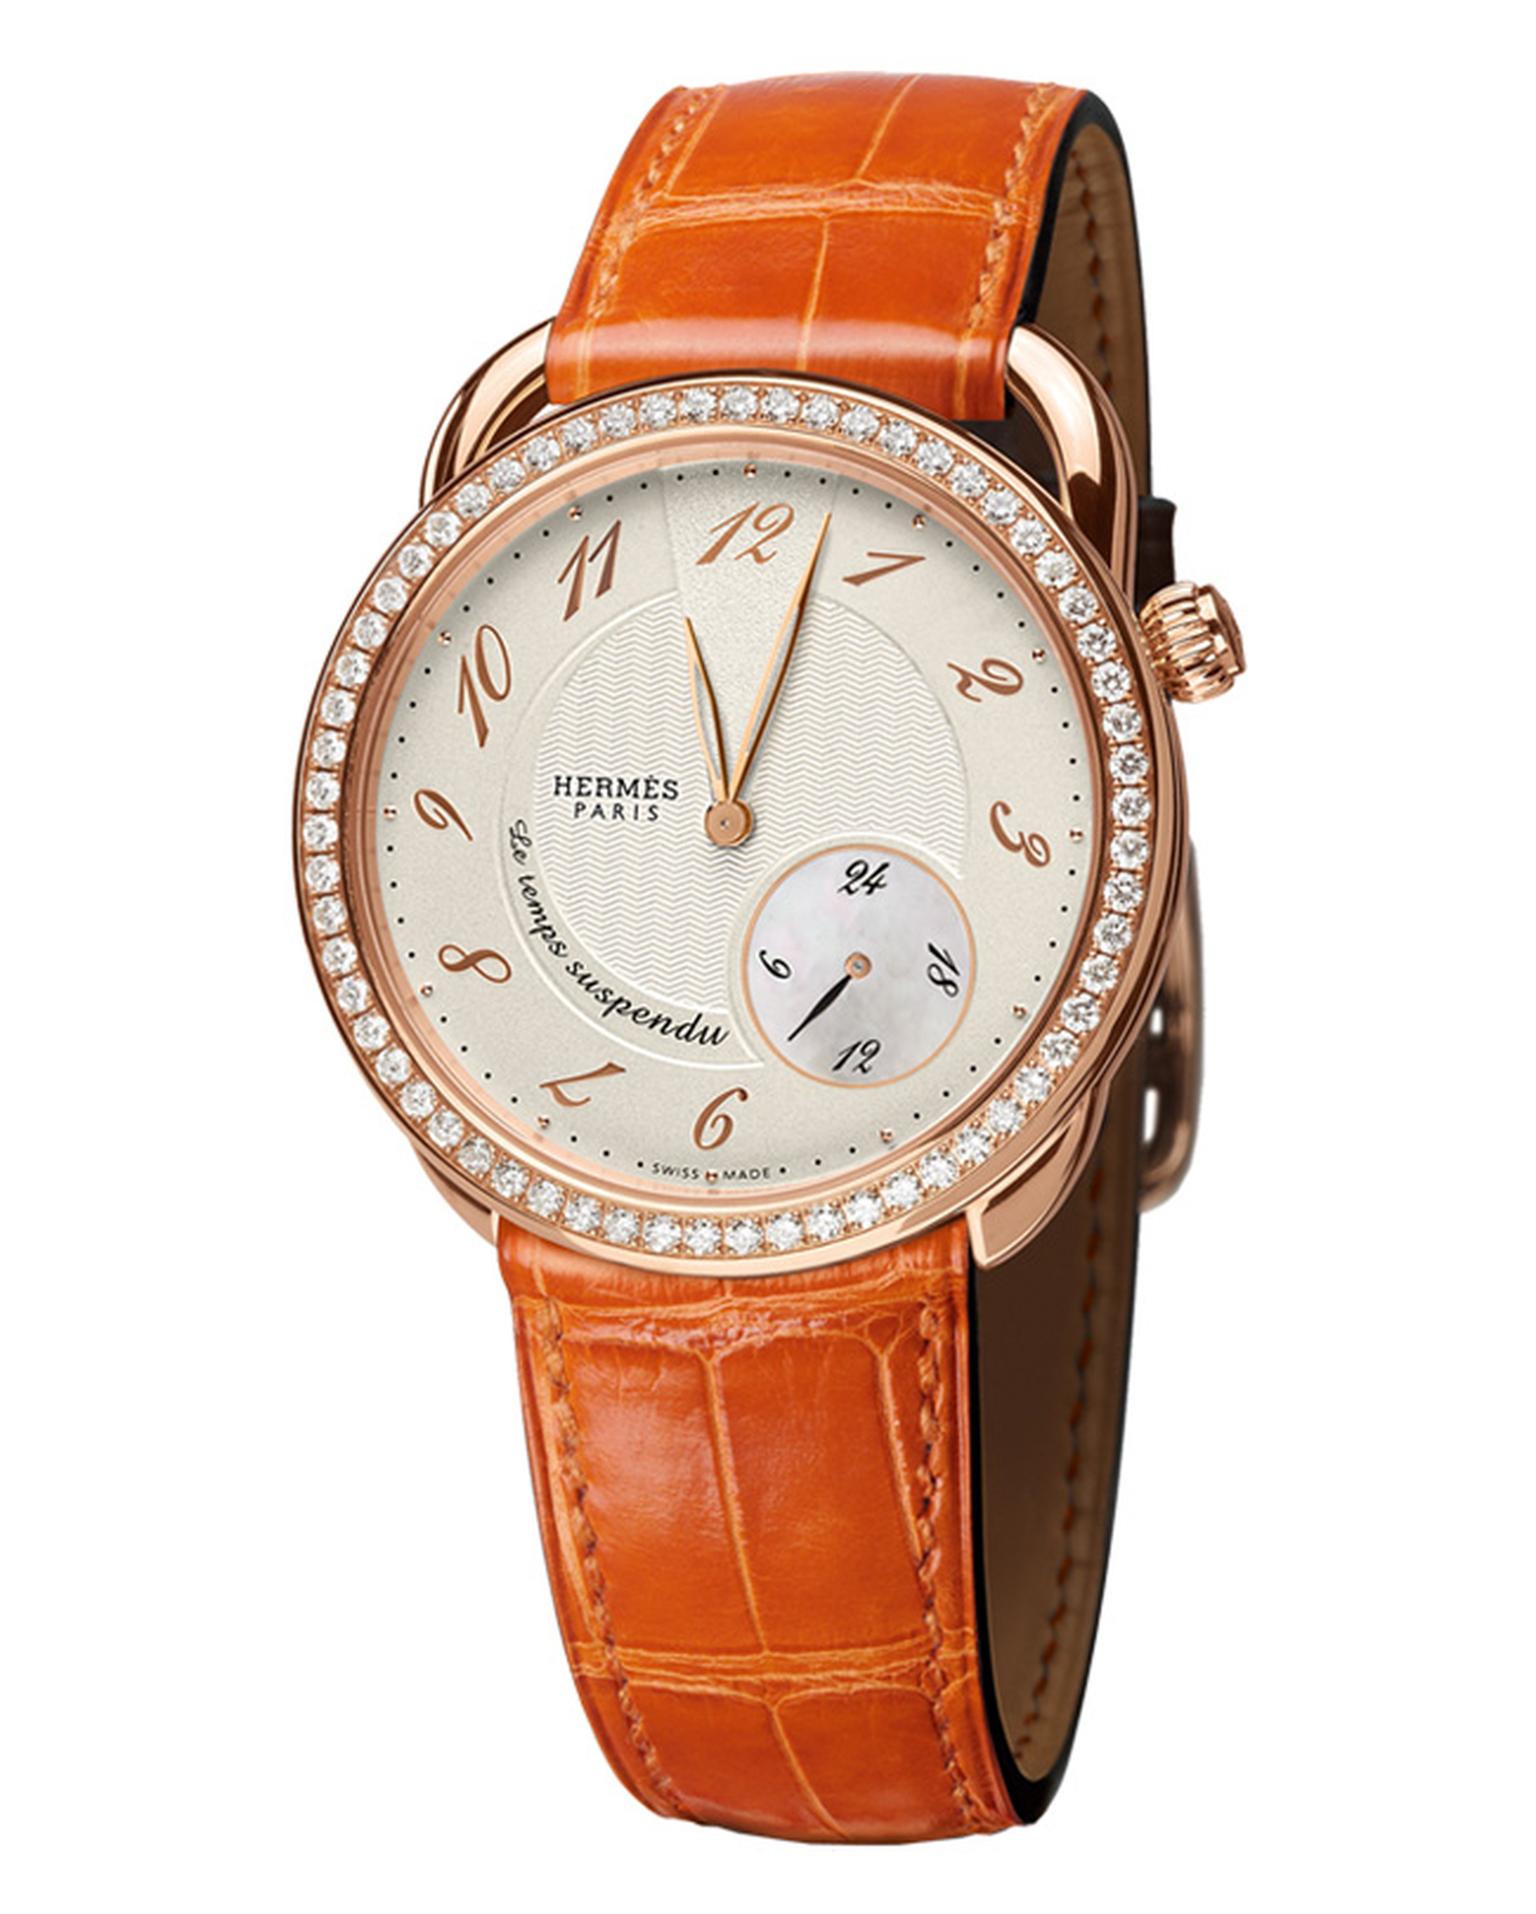 Hermes Arceau Le Temps Suspendu rose gold and diamond watch_20131031_Main